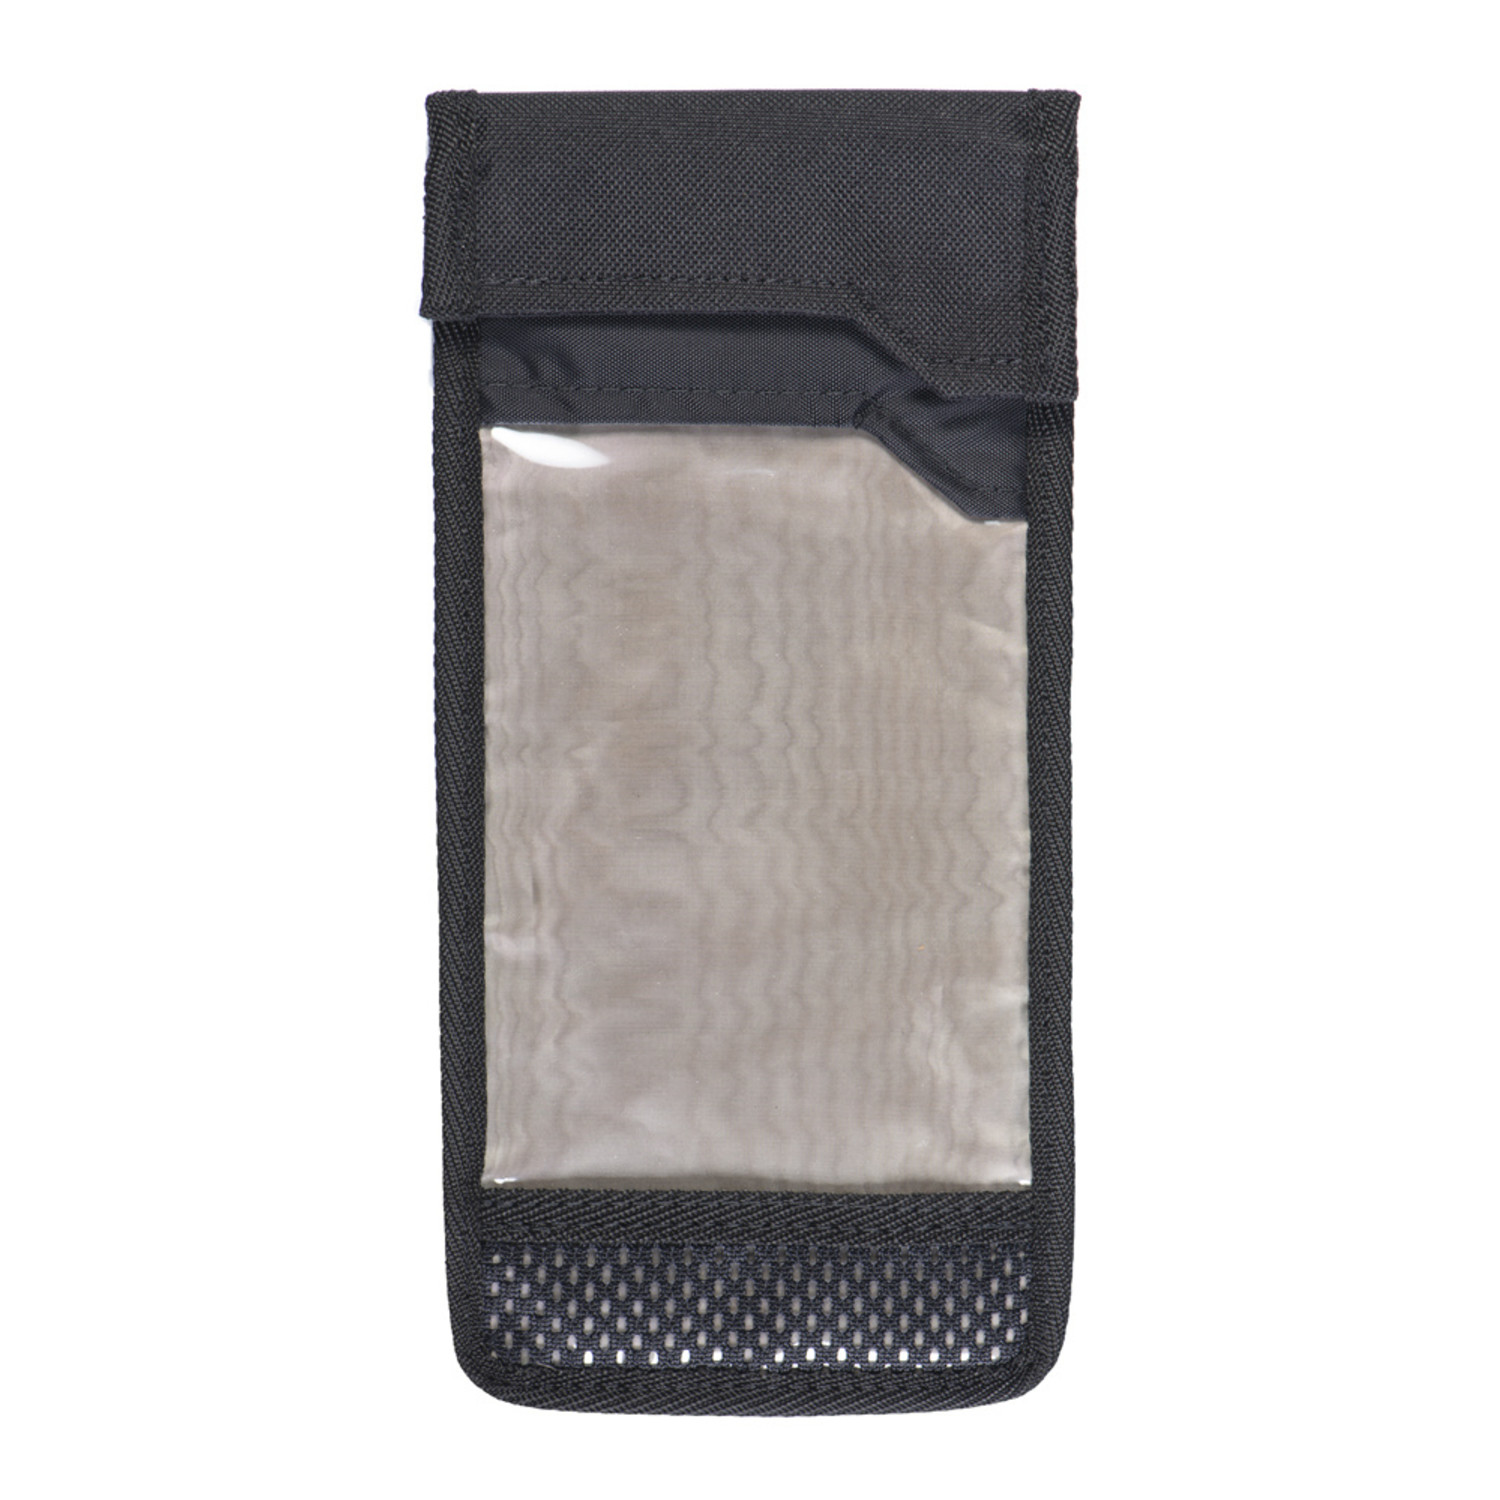 Phone Shield 2 with window - Uw specialist in forensische artikelen